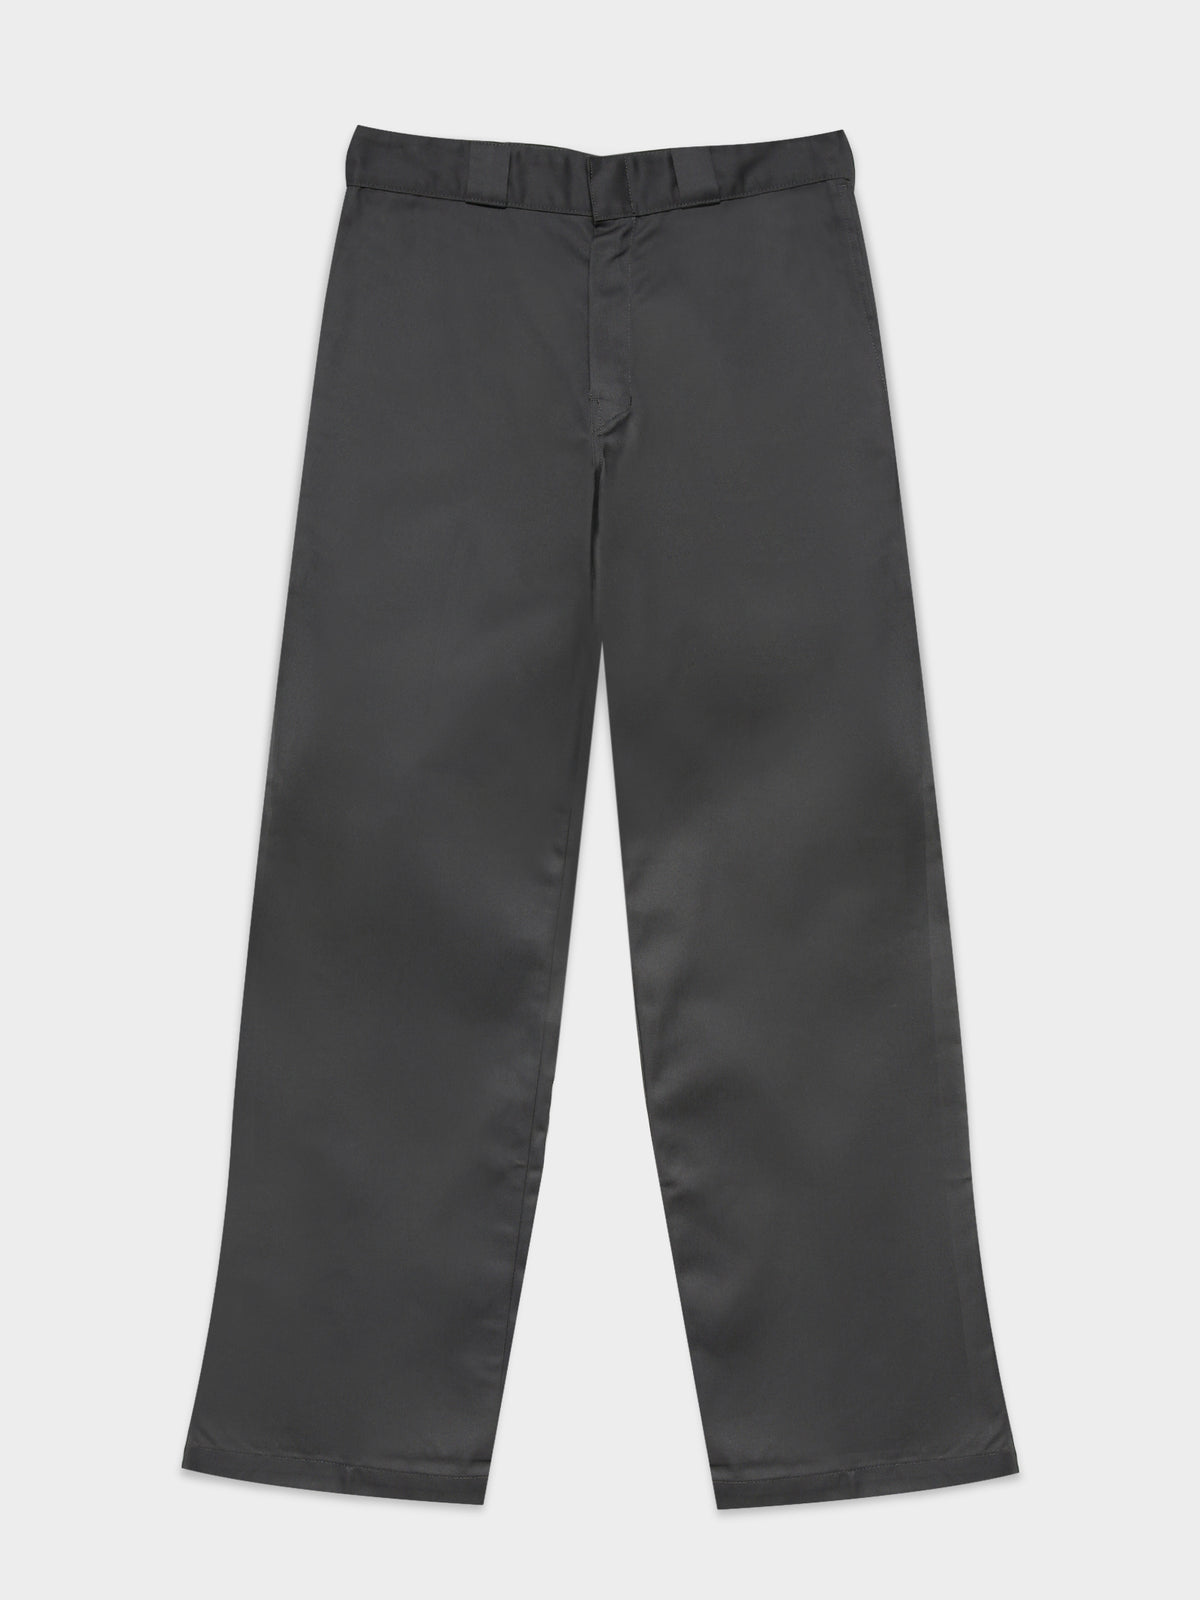 Original 874 Work Pants in Charcoal Grey